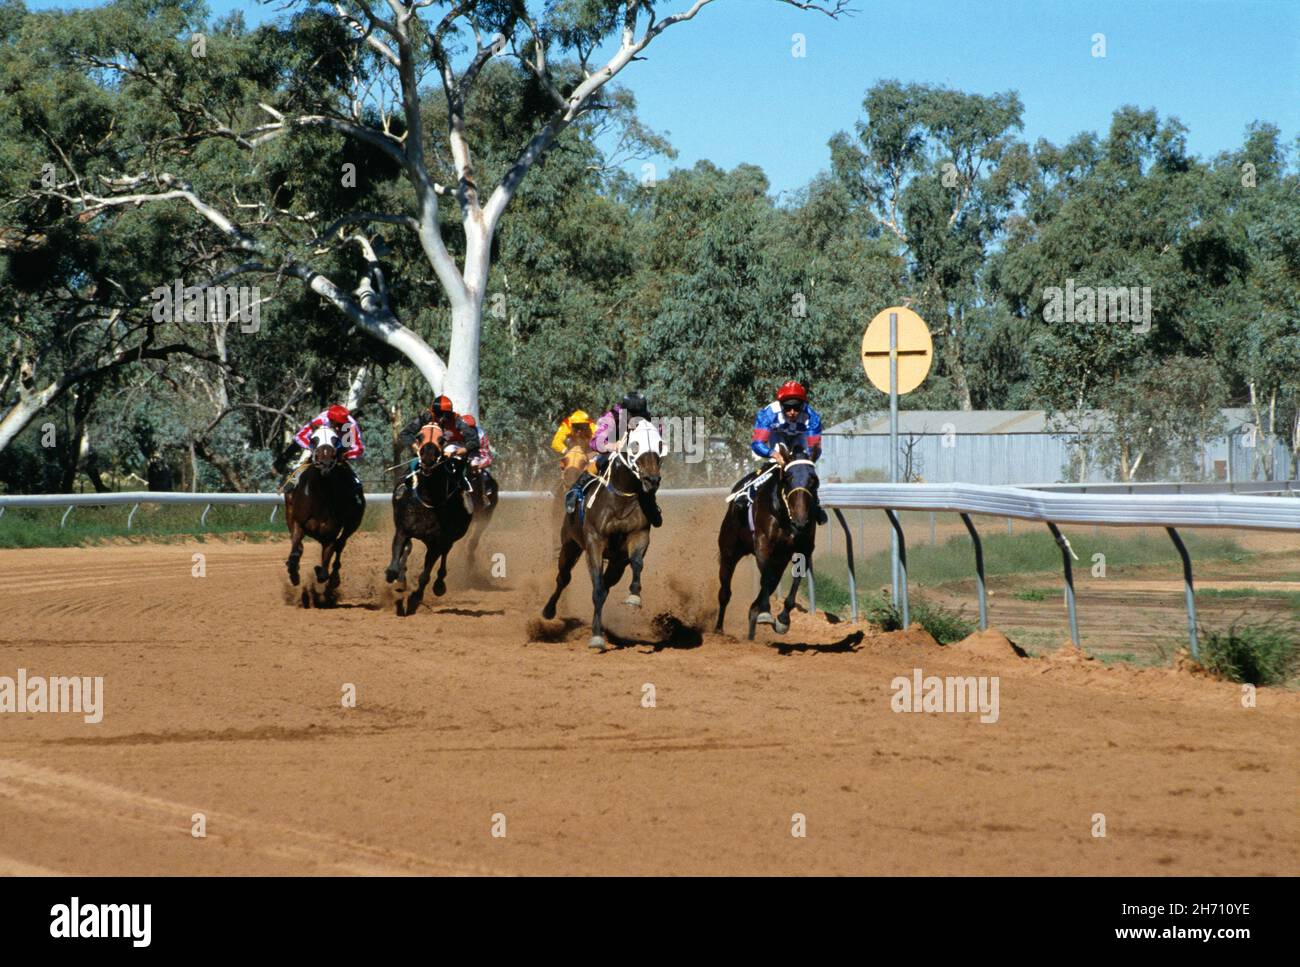 Australia. Northern Territory. Horse racing on dirt track. Stock Photo